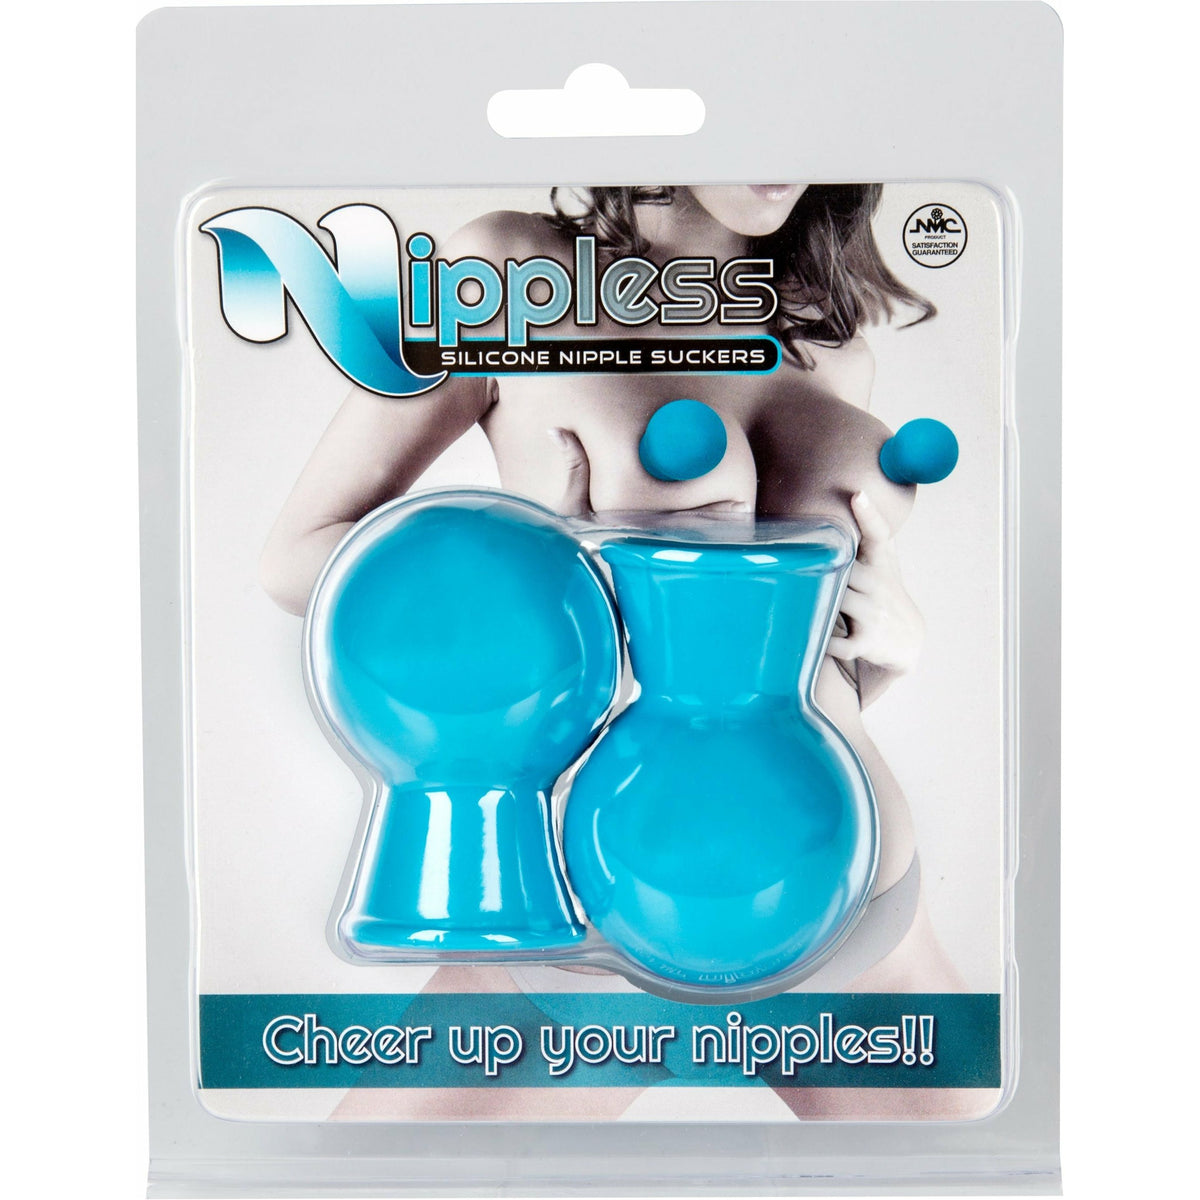 NMC Nippless - Silicone Nipple Suckers - Blue